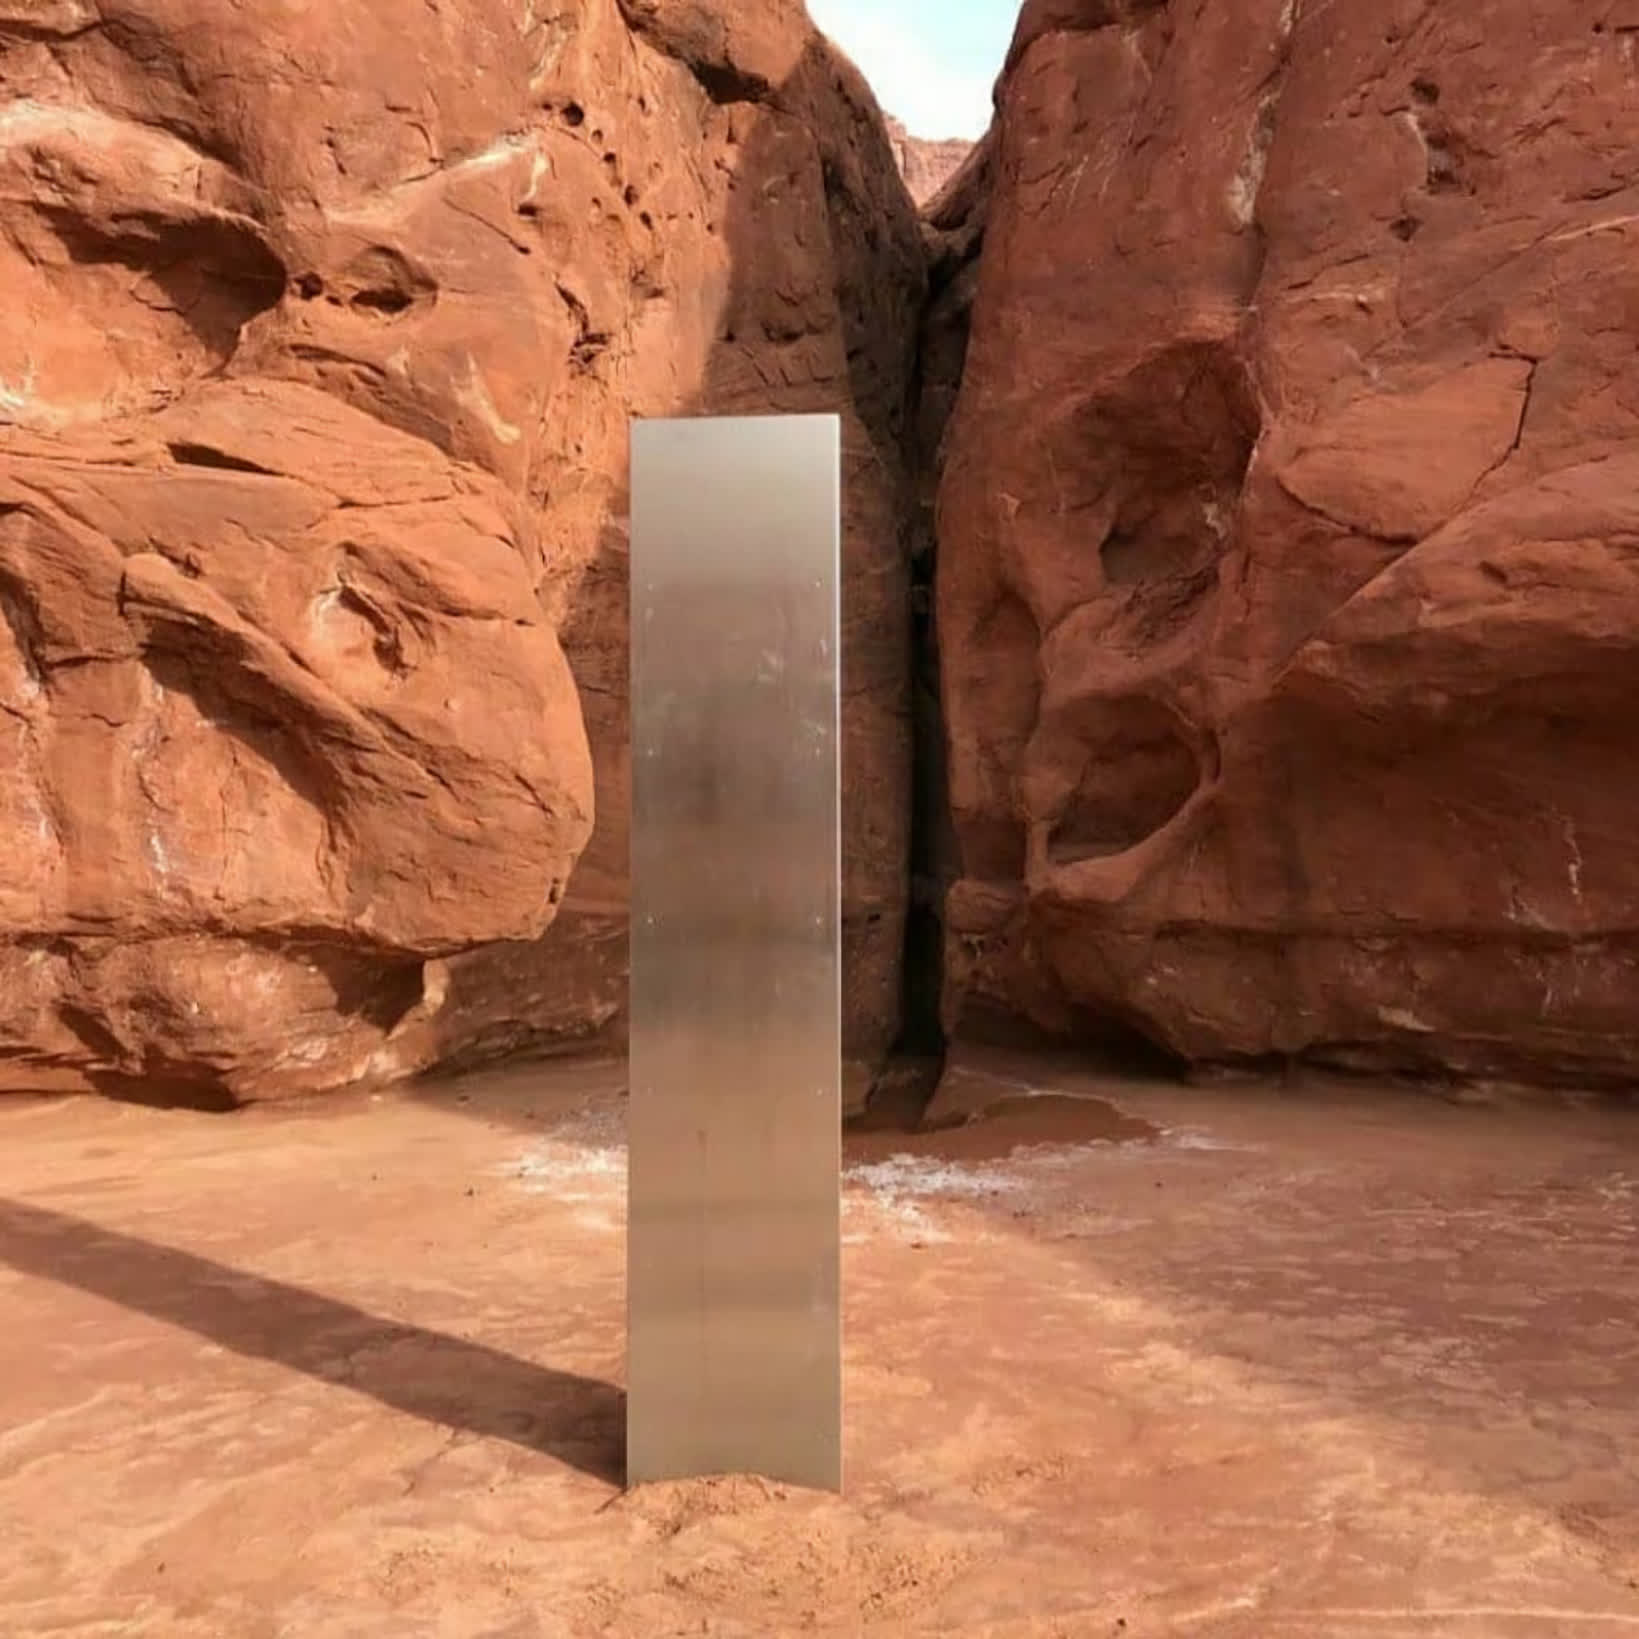 Utah desert home to mysterious metal monolith